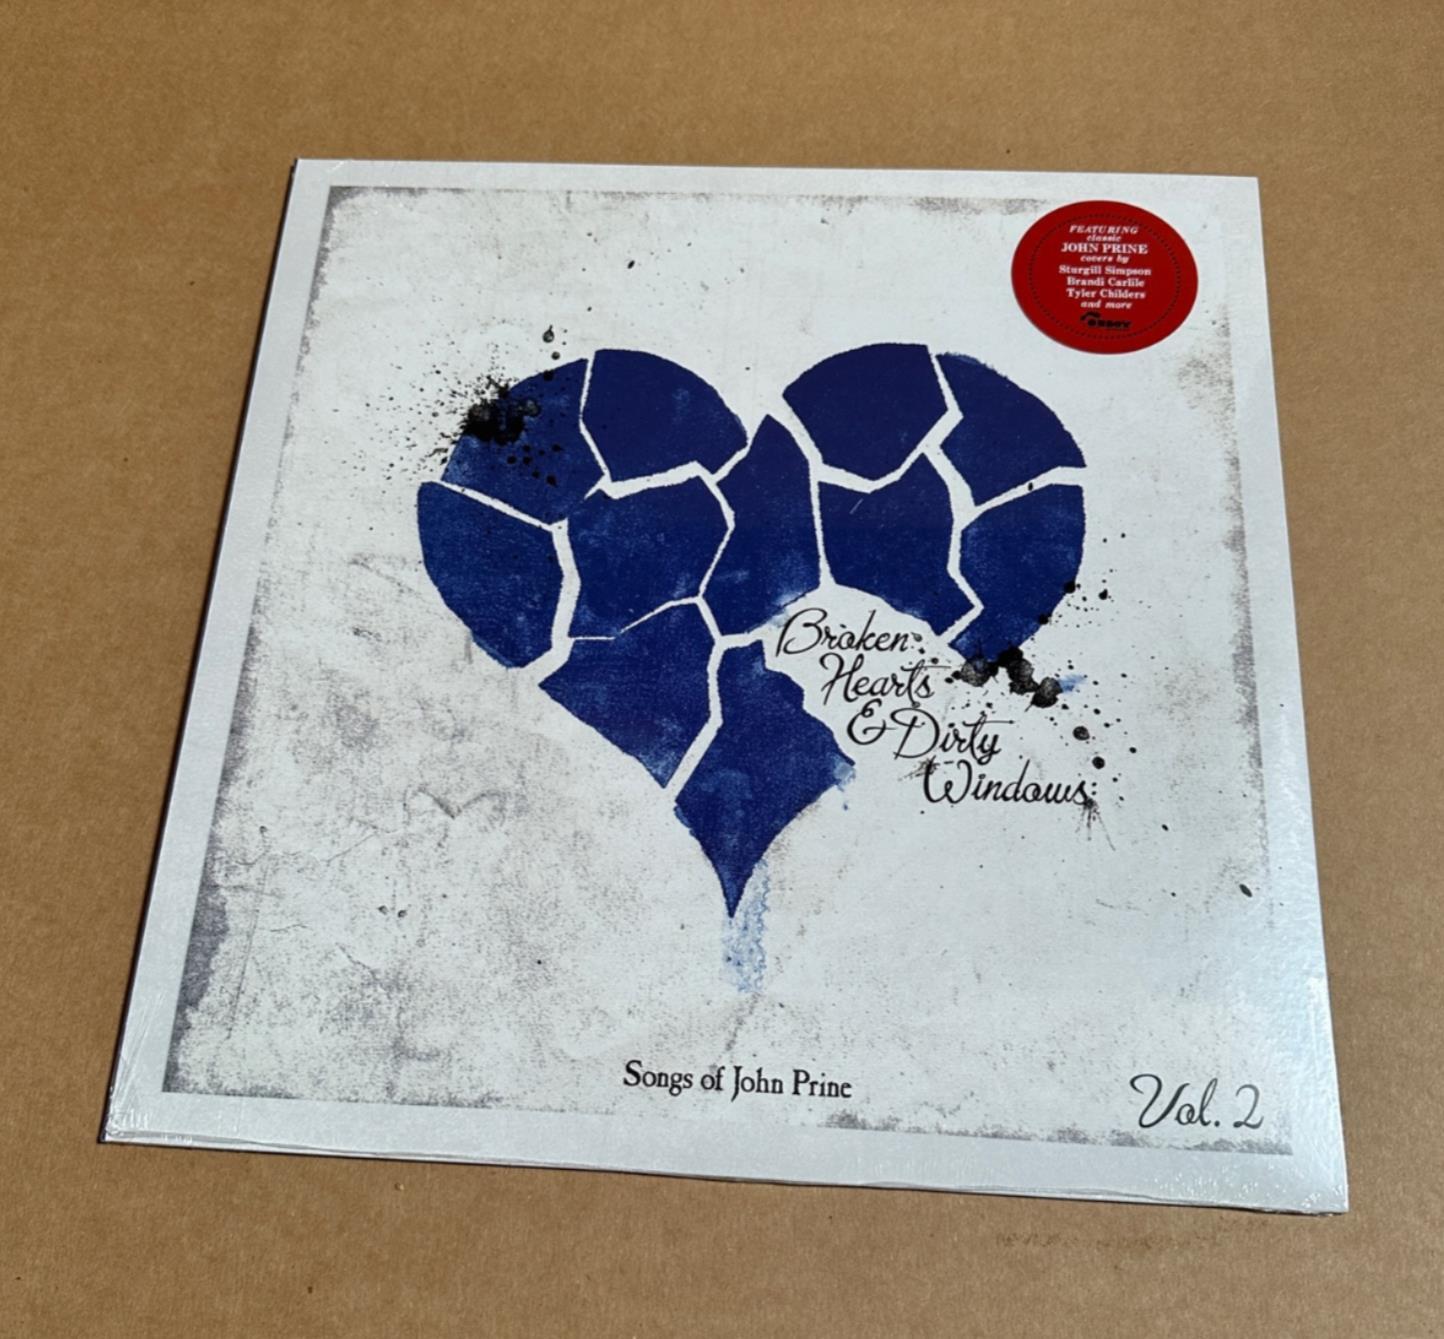 Broken Hearts & Dirty Windows: Songs of John Prine Vol 2 Vinyl Record